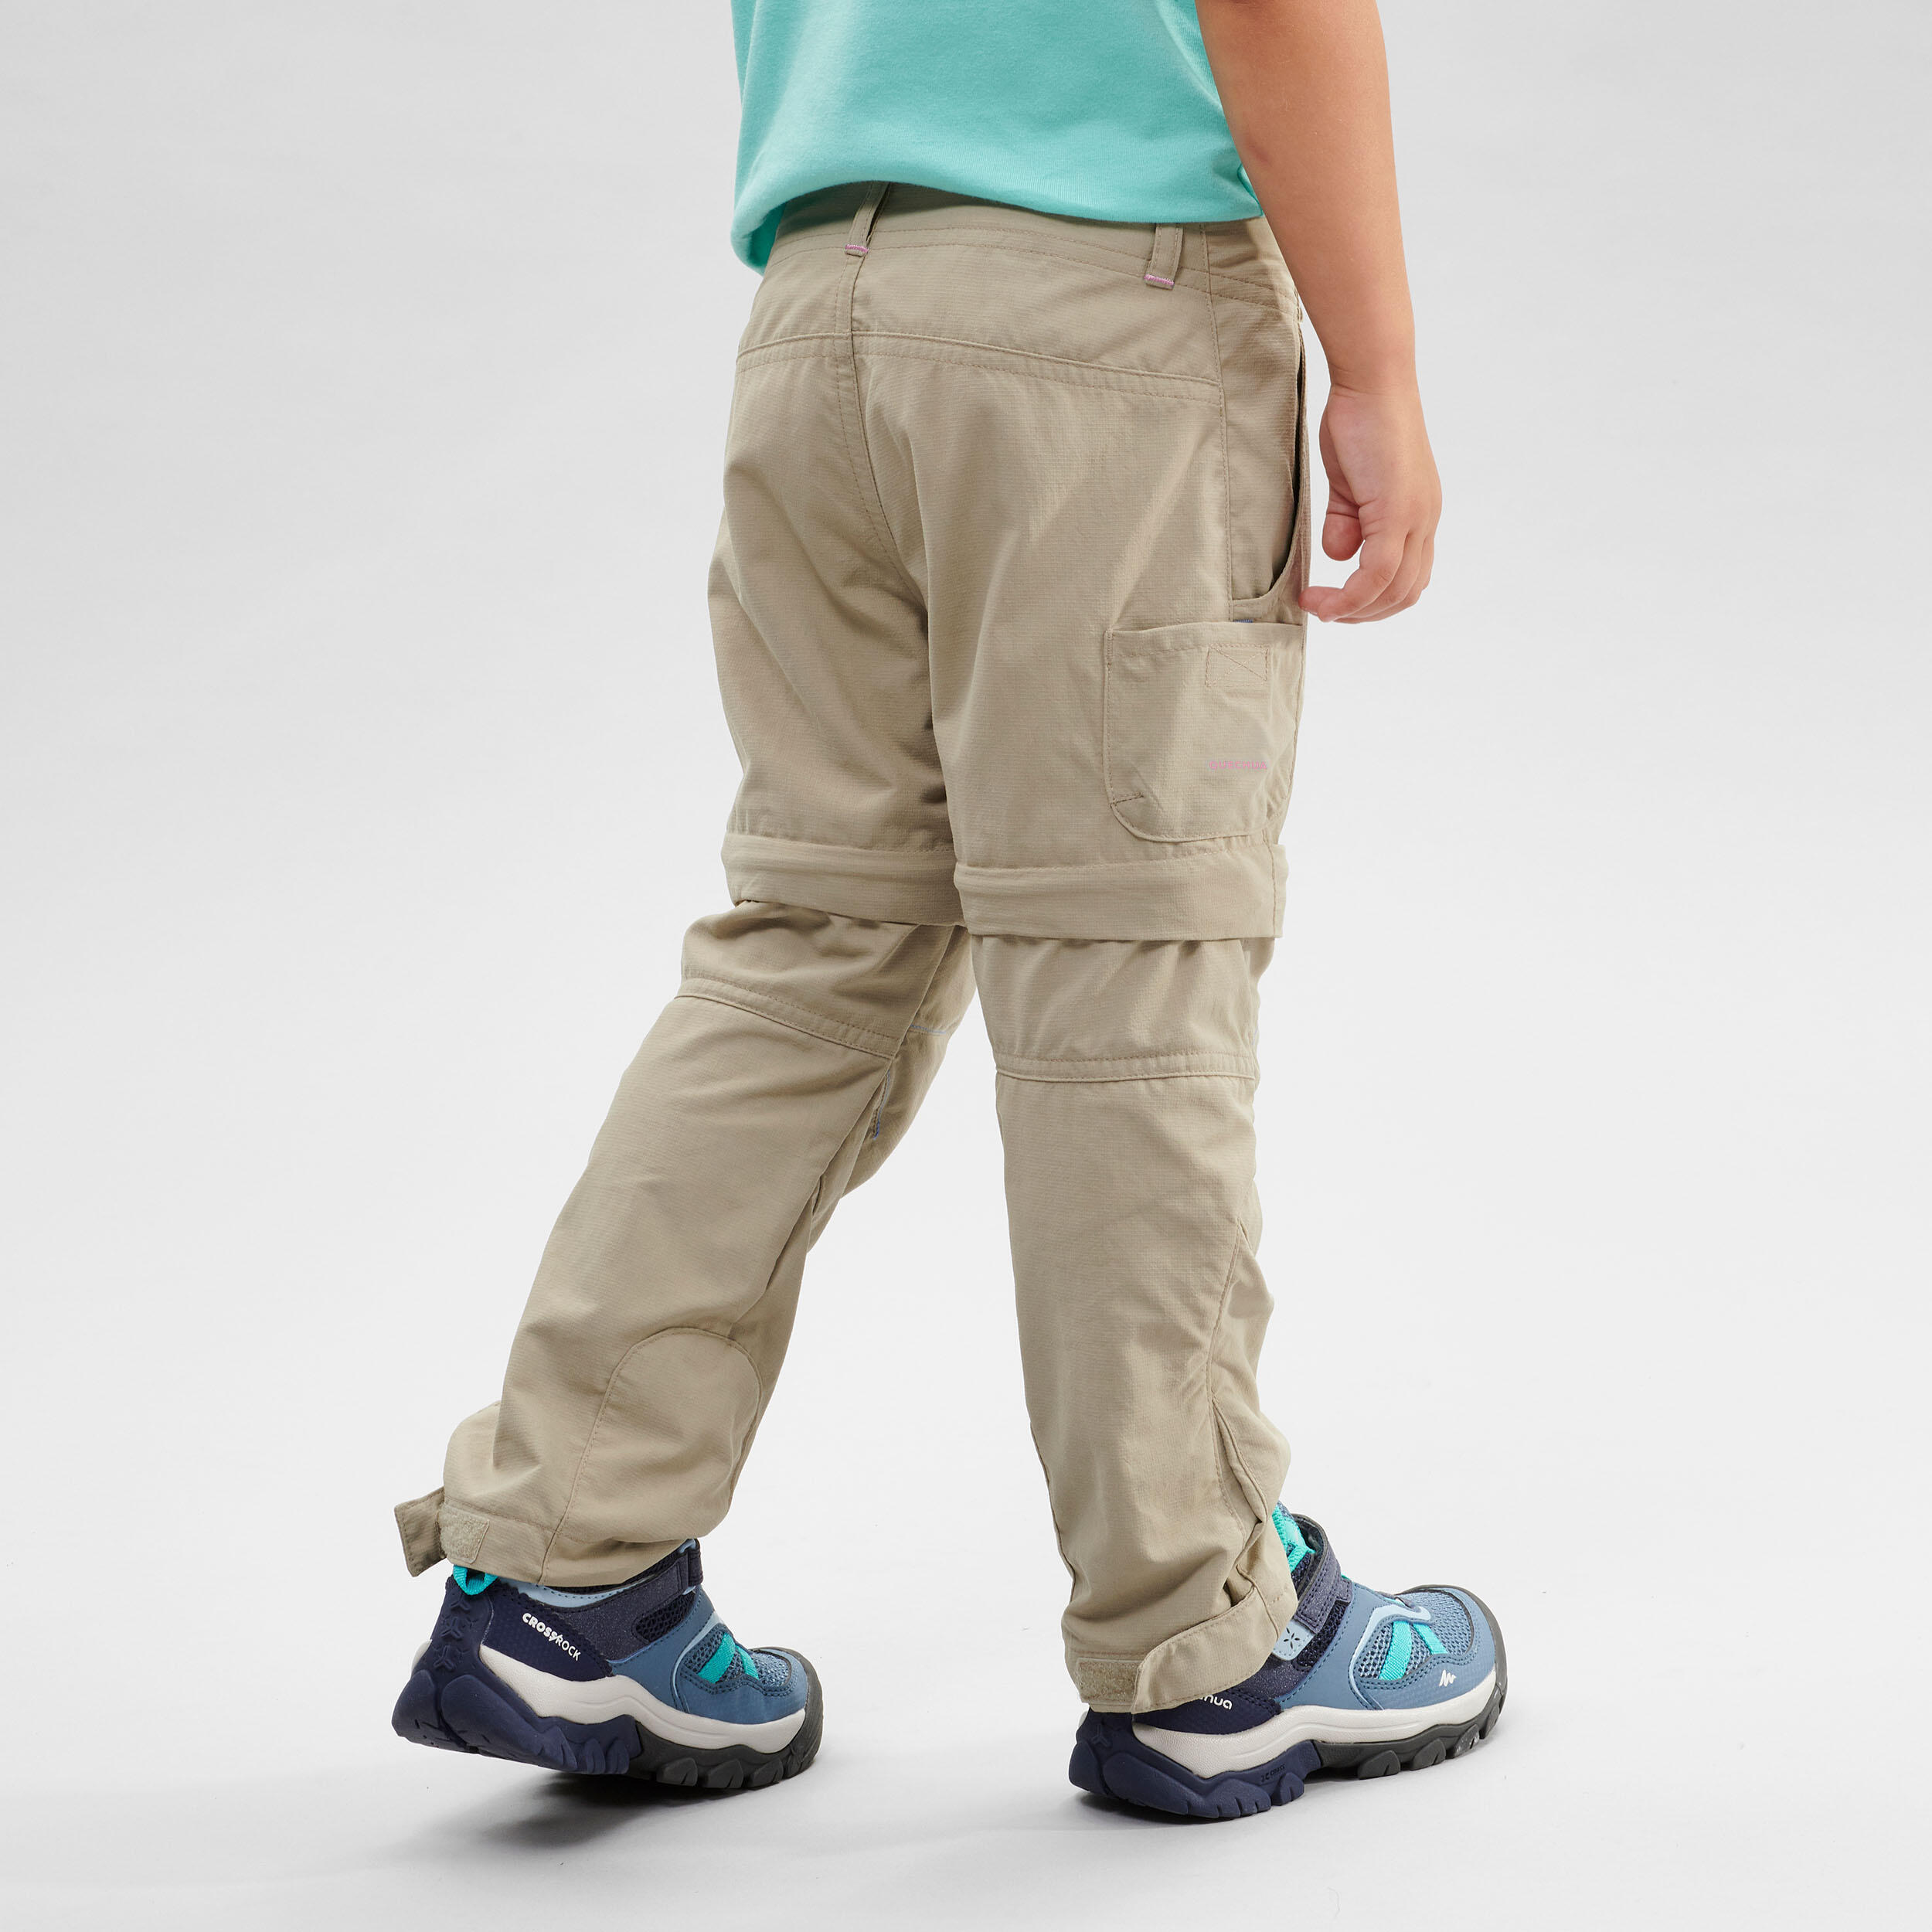 Kids’ Modular Hiking Trousers - MH500 KID Aged 2-6 YEARS 4/11